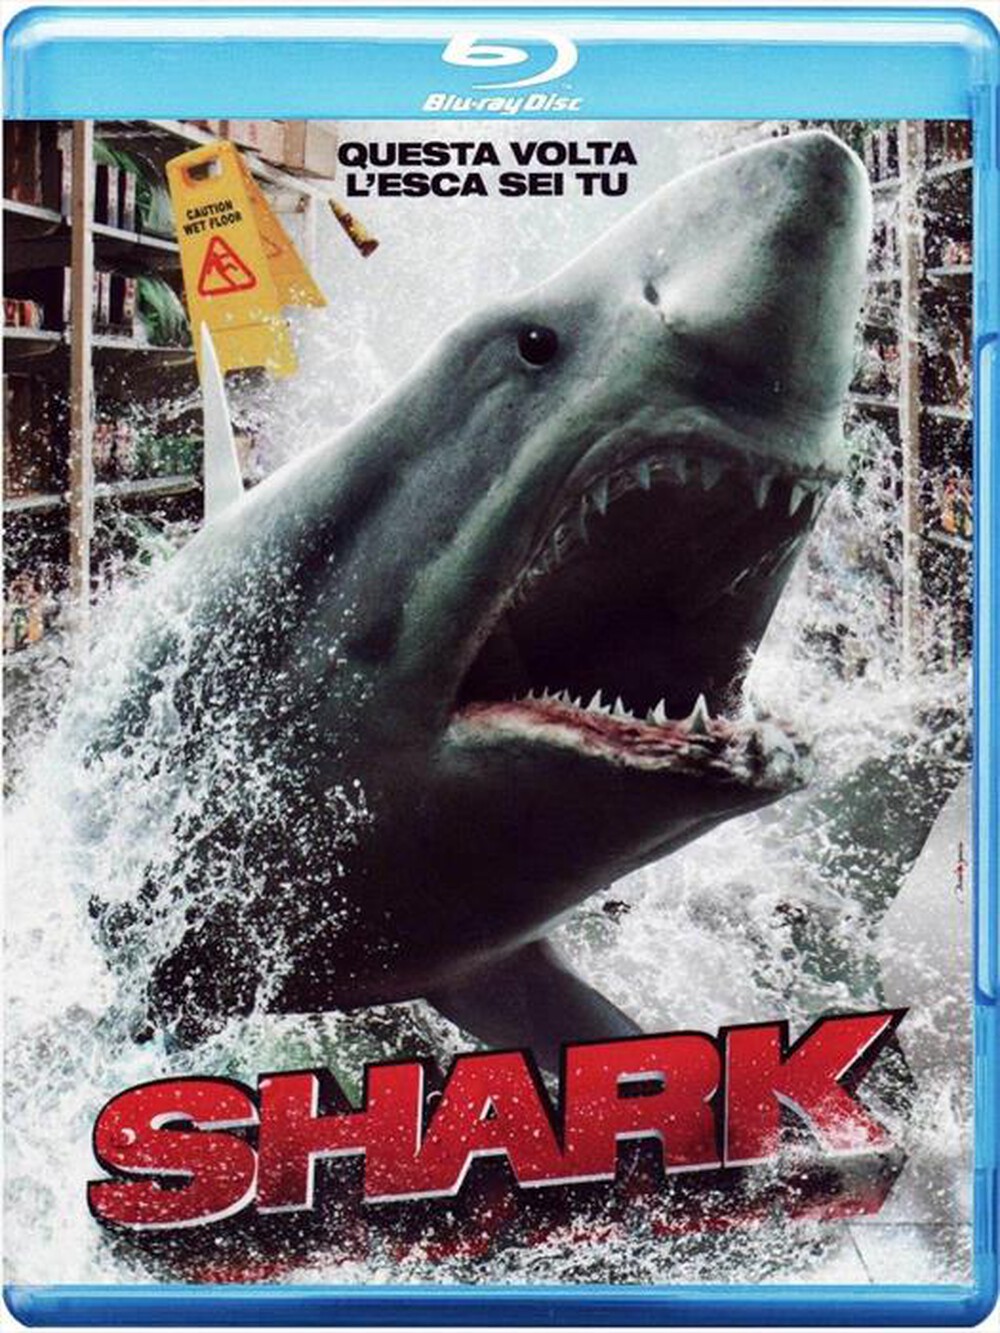 "WARNER HOME VIDEO - Shark"